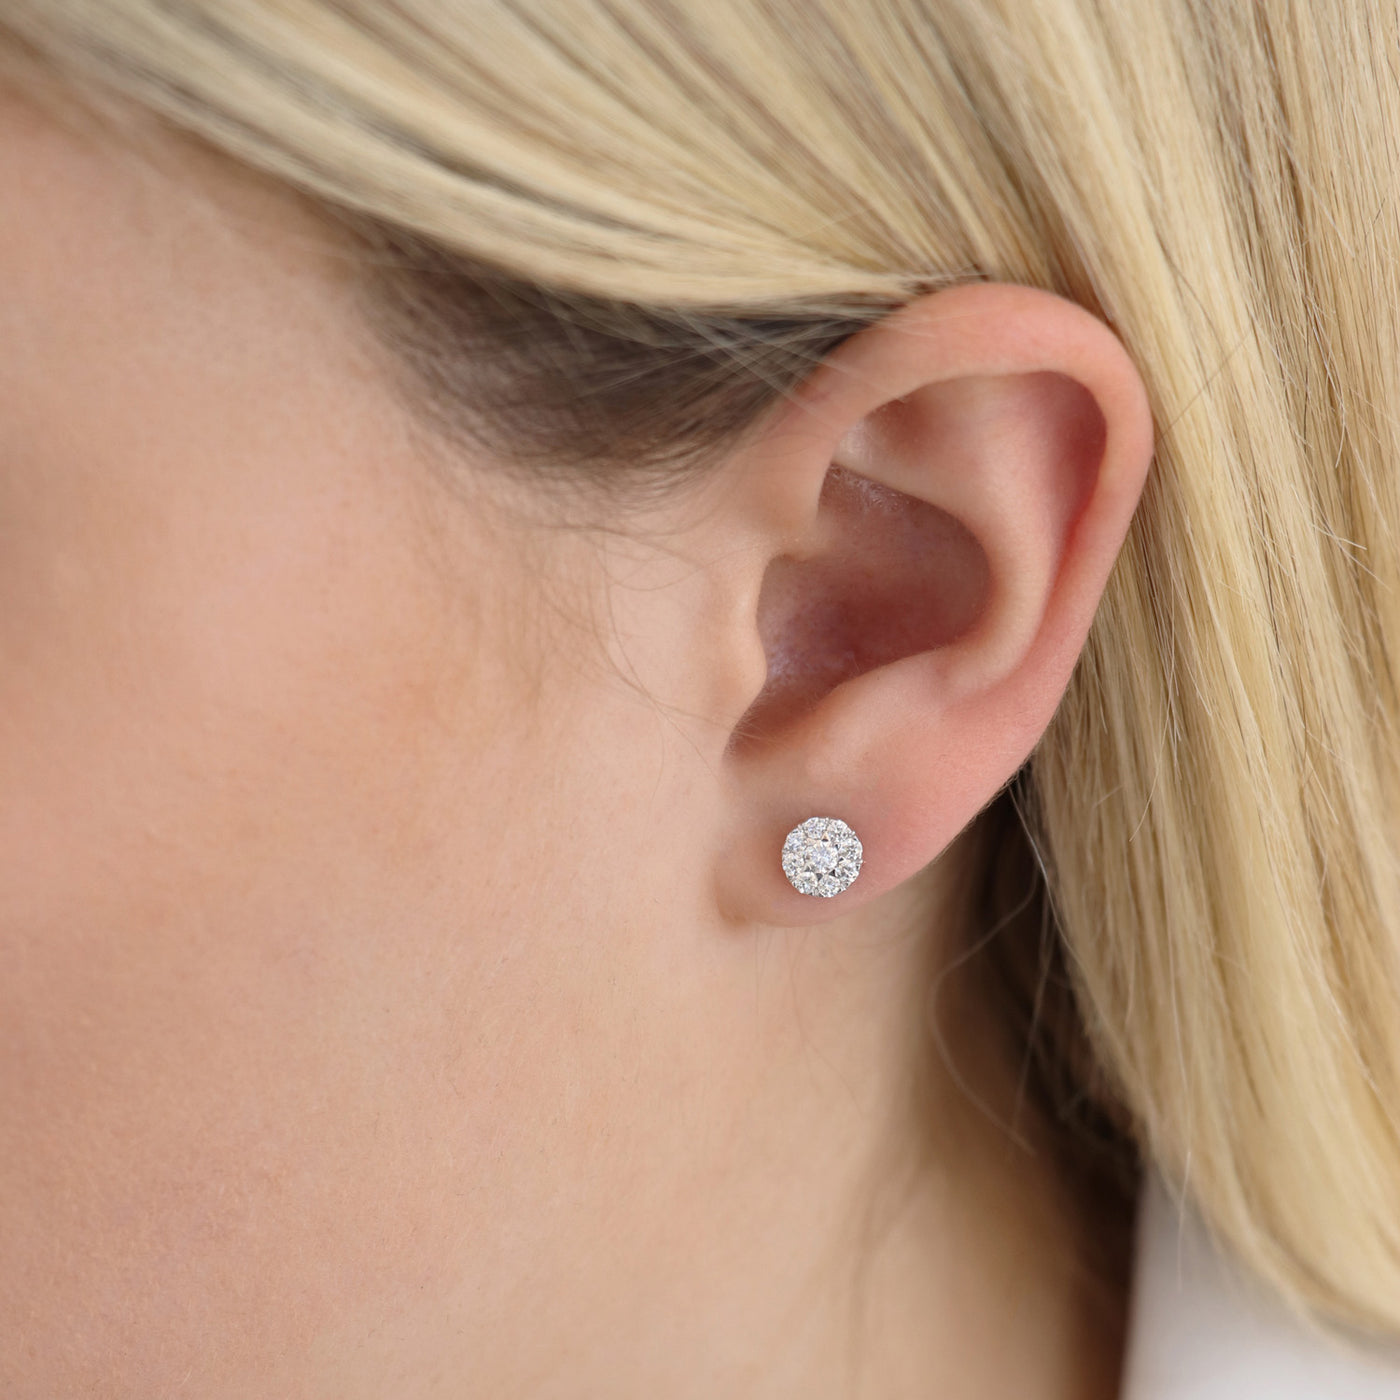 9ct White Gold Diamond Cluster Stud Earrings - 1/2 carat